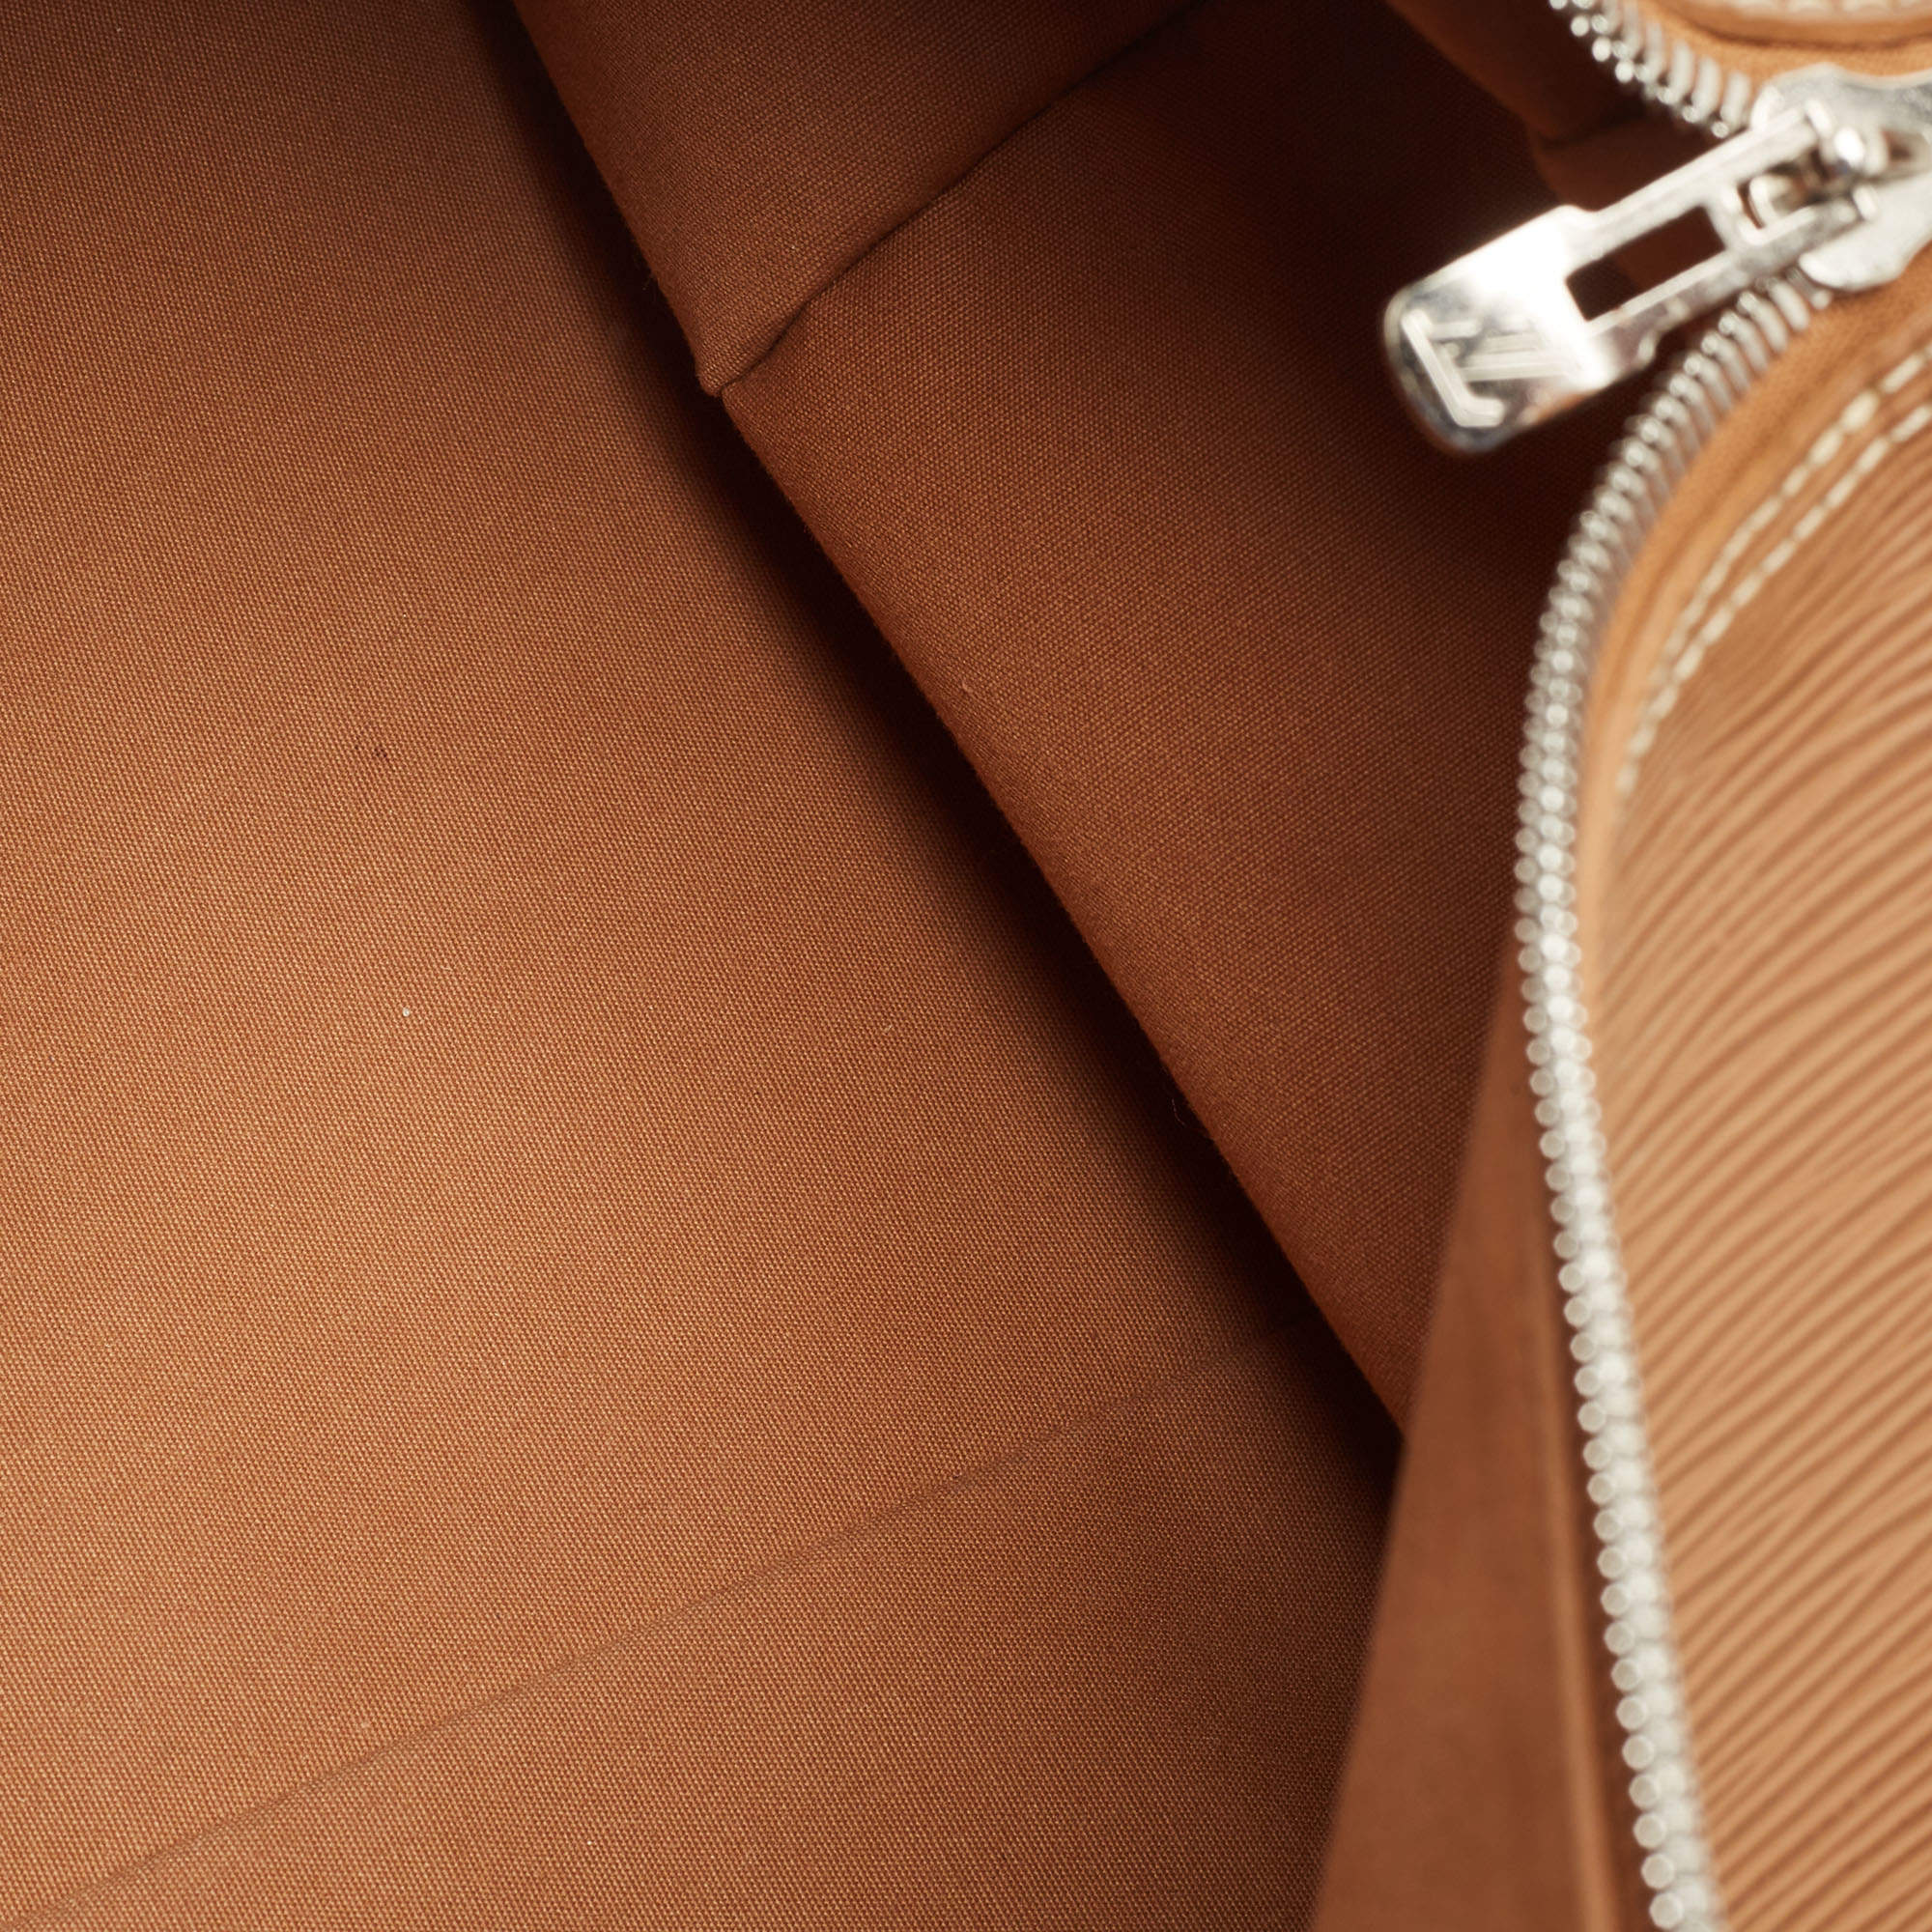 Louis Vuitton Vintage Cannelle Keepall 45 Epi Leather Travel Bag